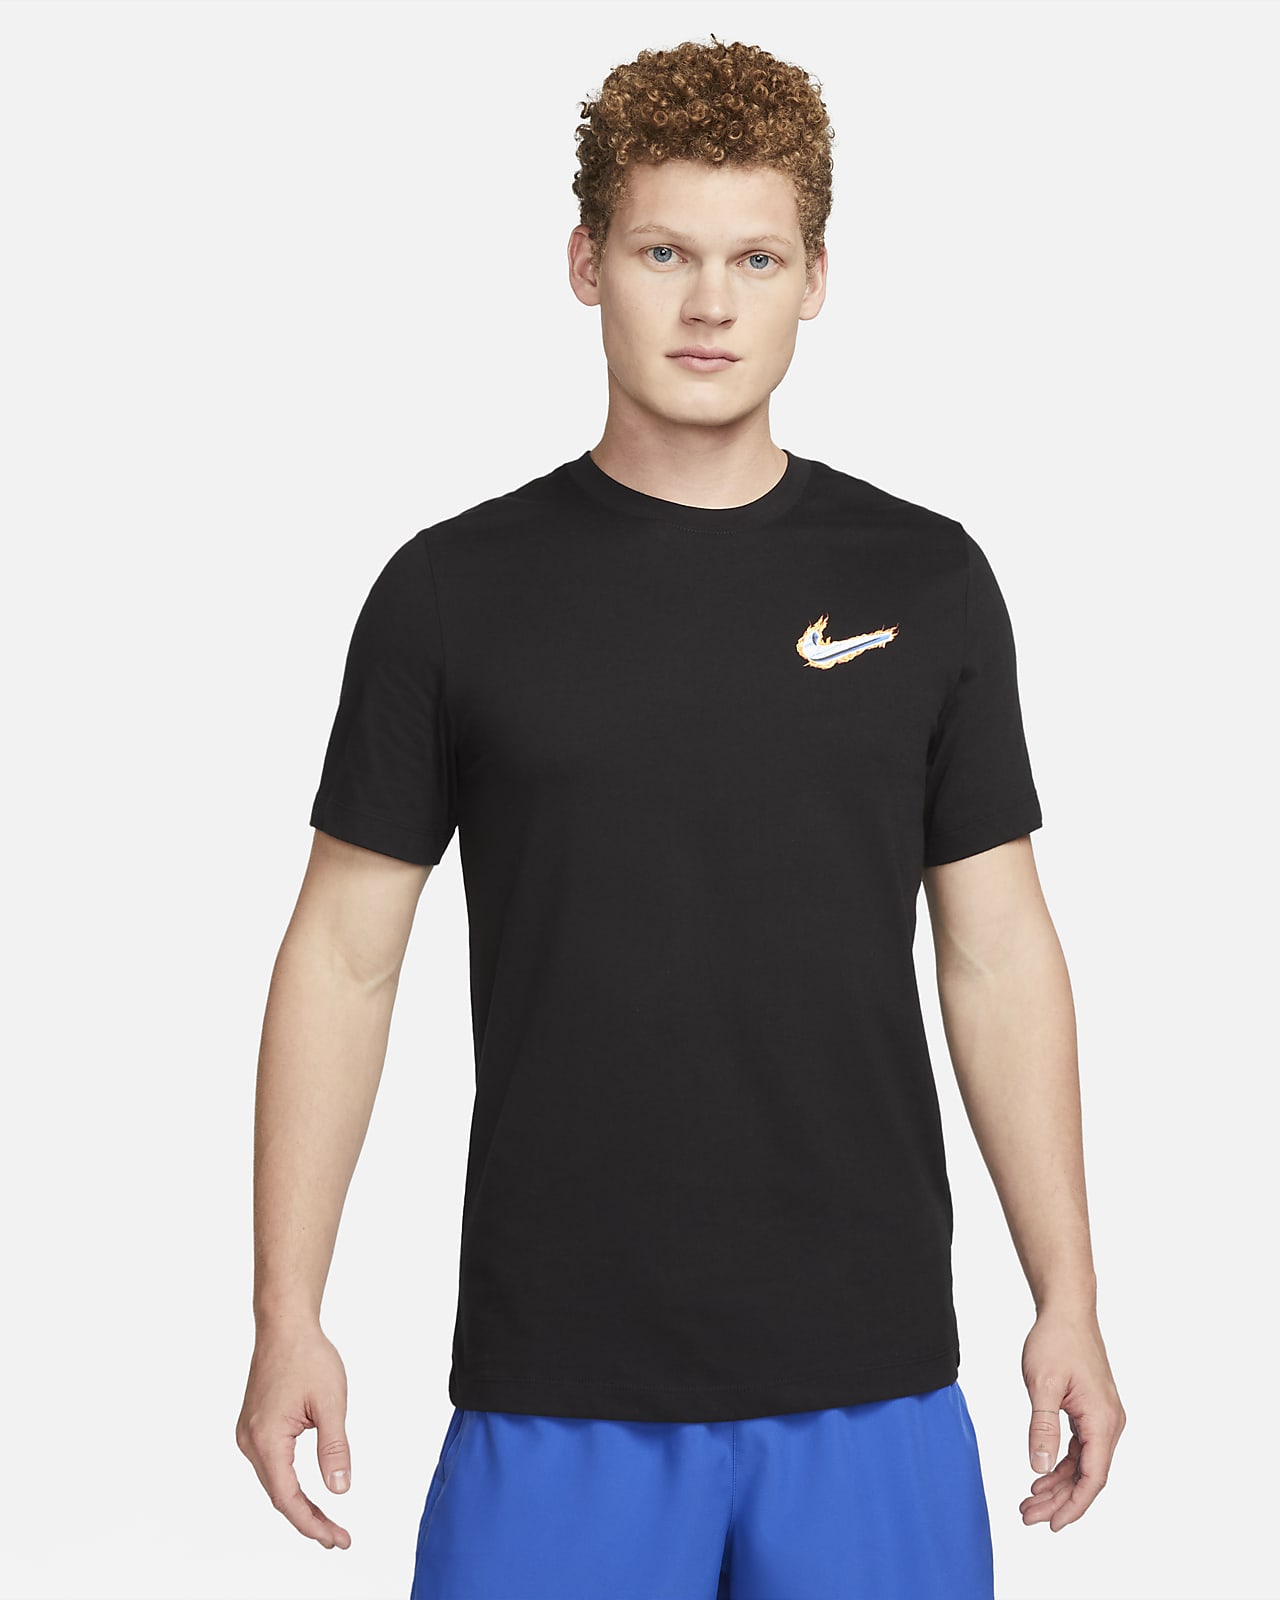 Nike Men's Fitness T-Shirt. LU